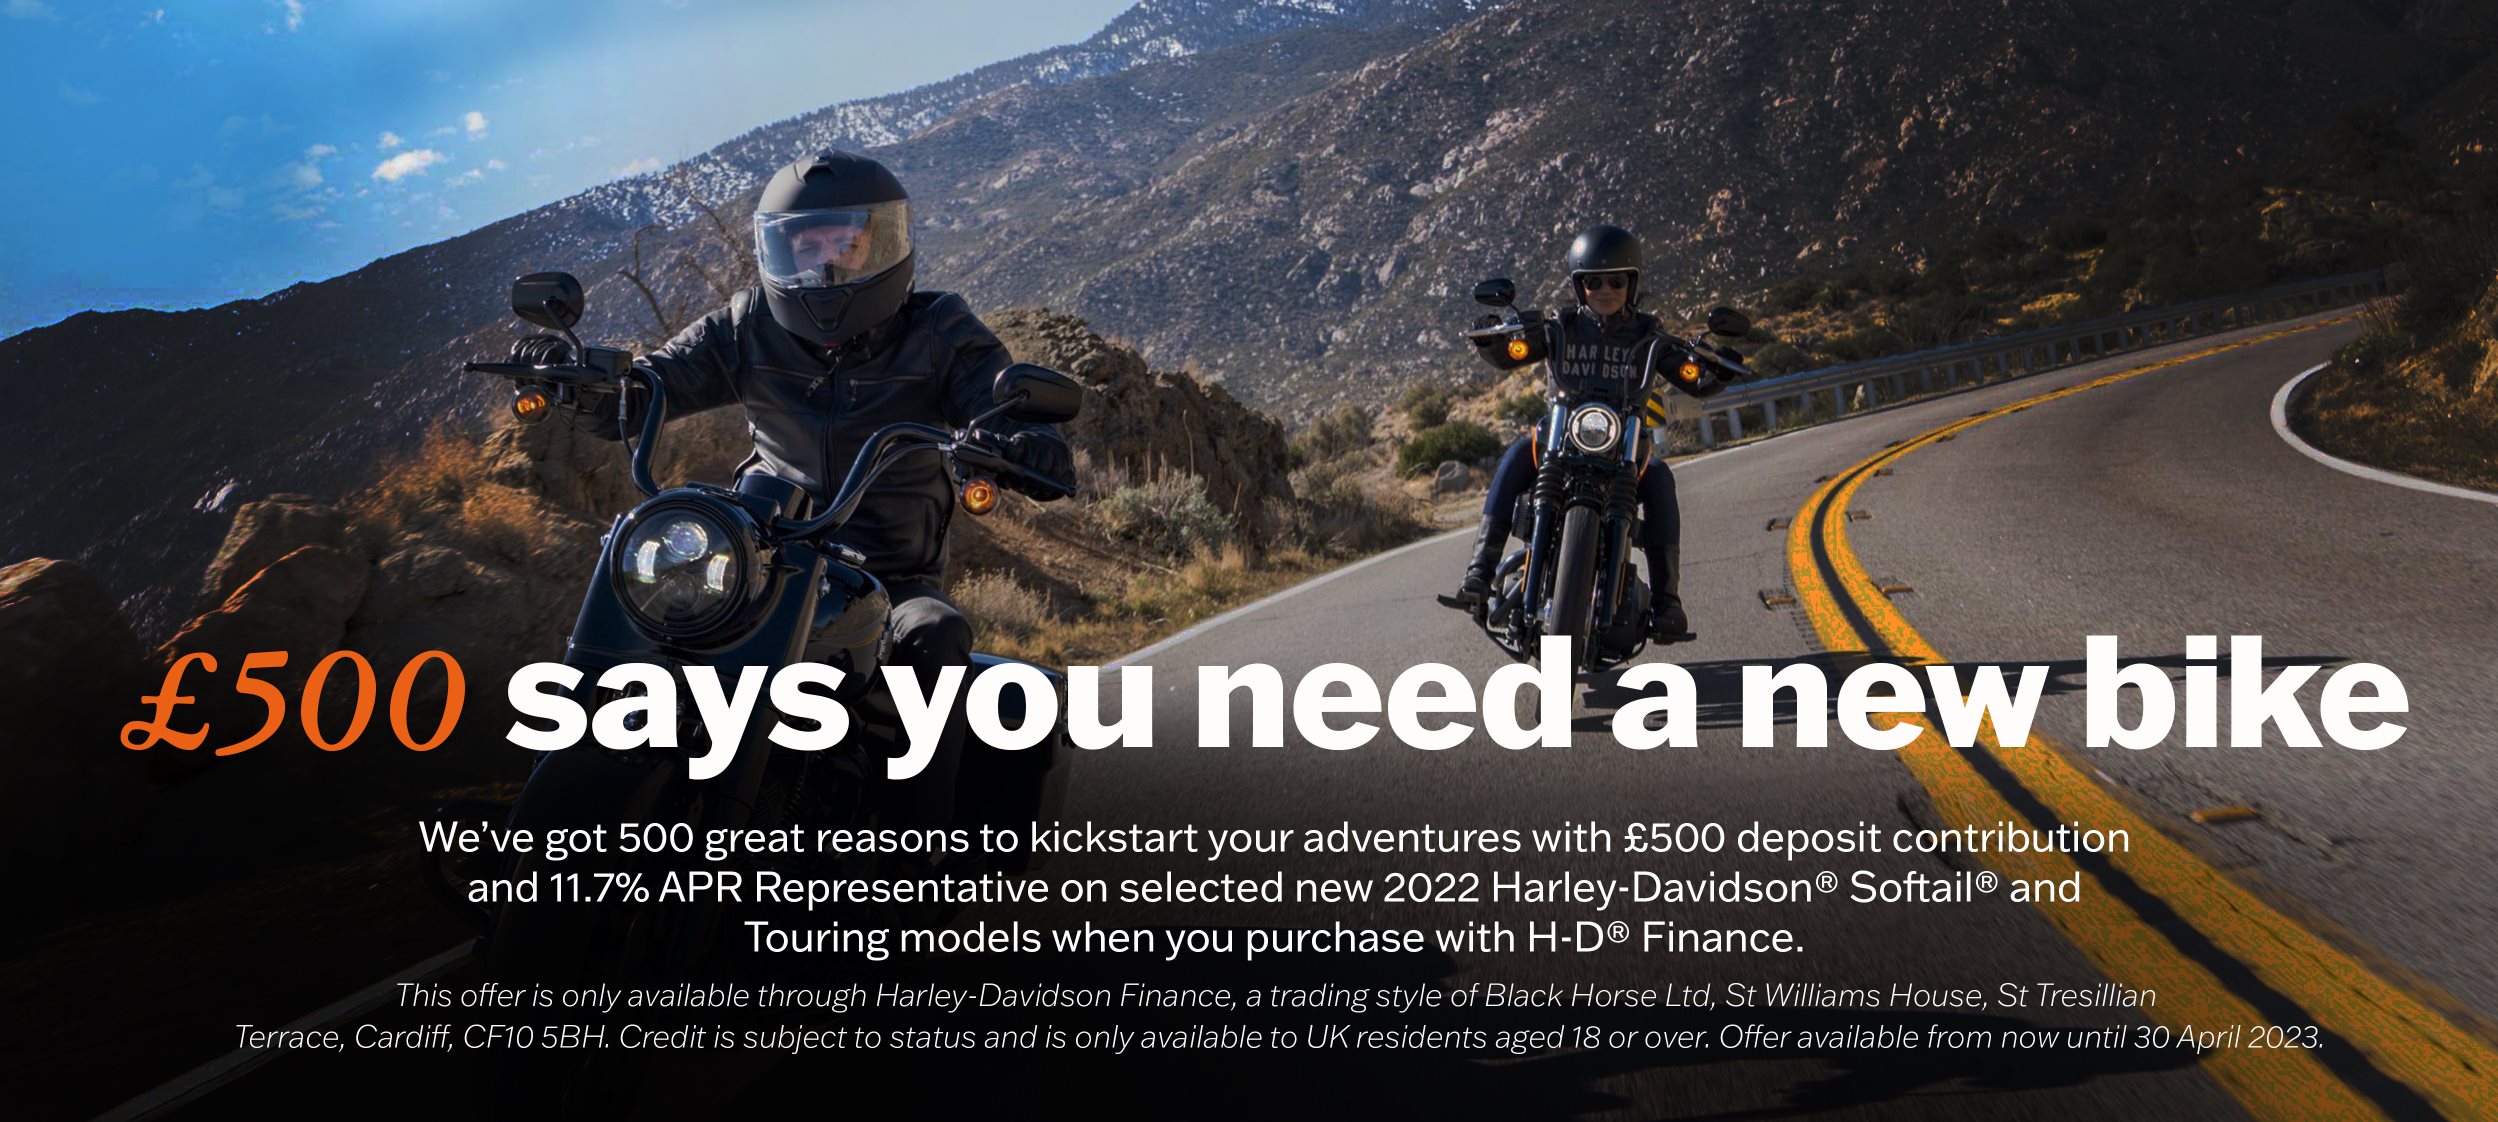 New Harley Davidson Softail offers